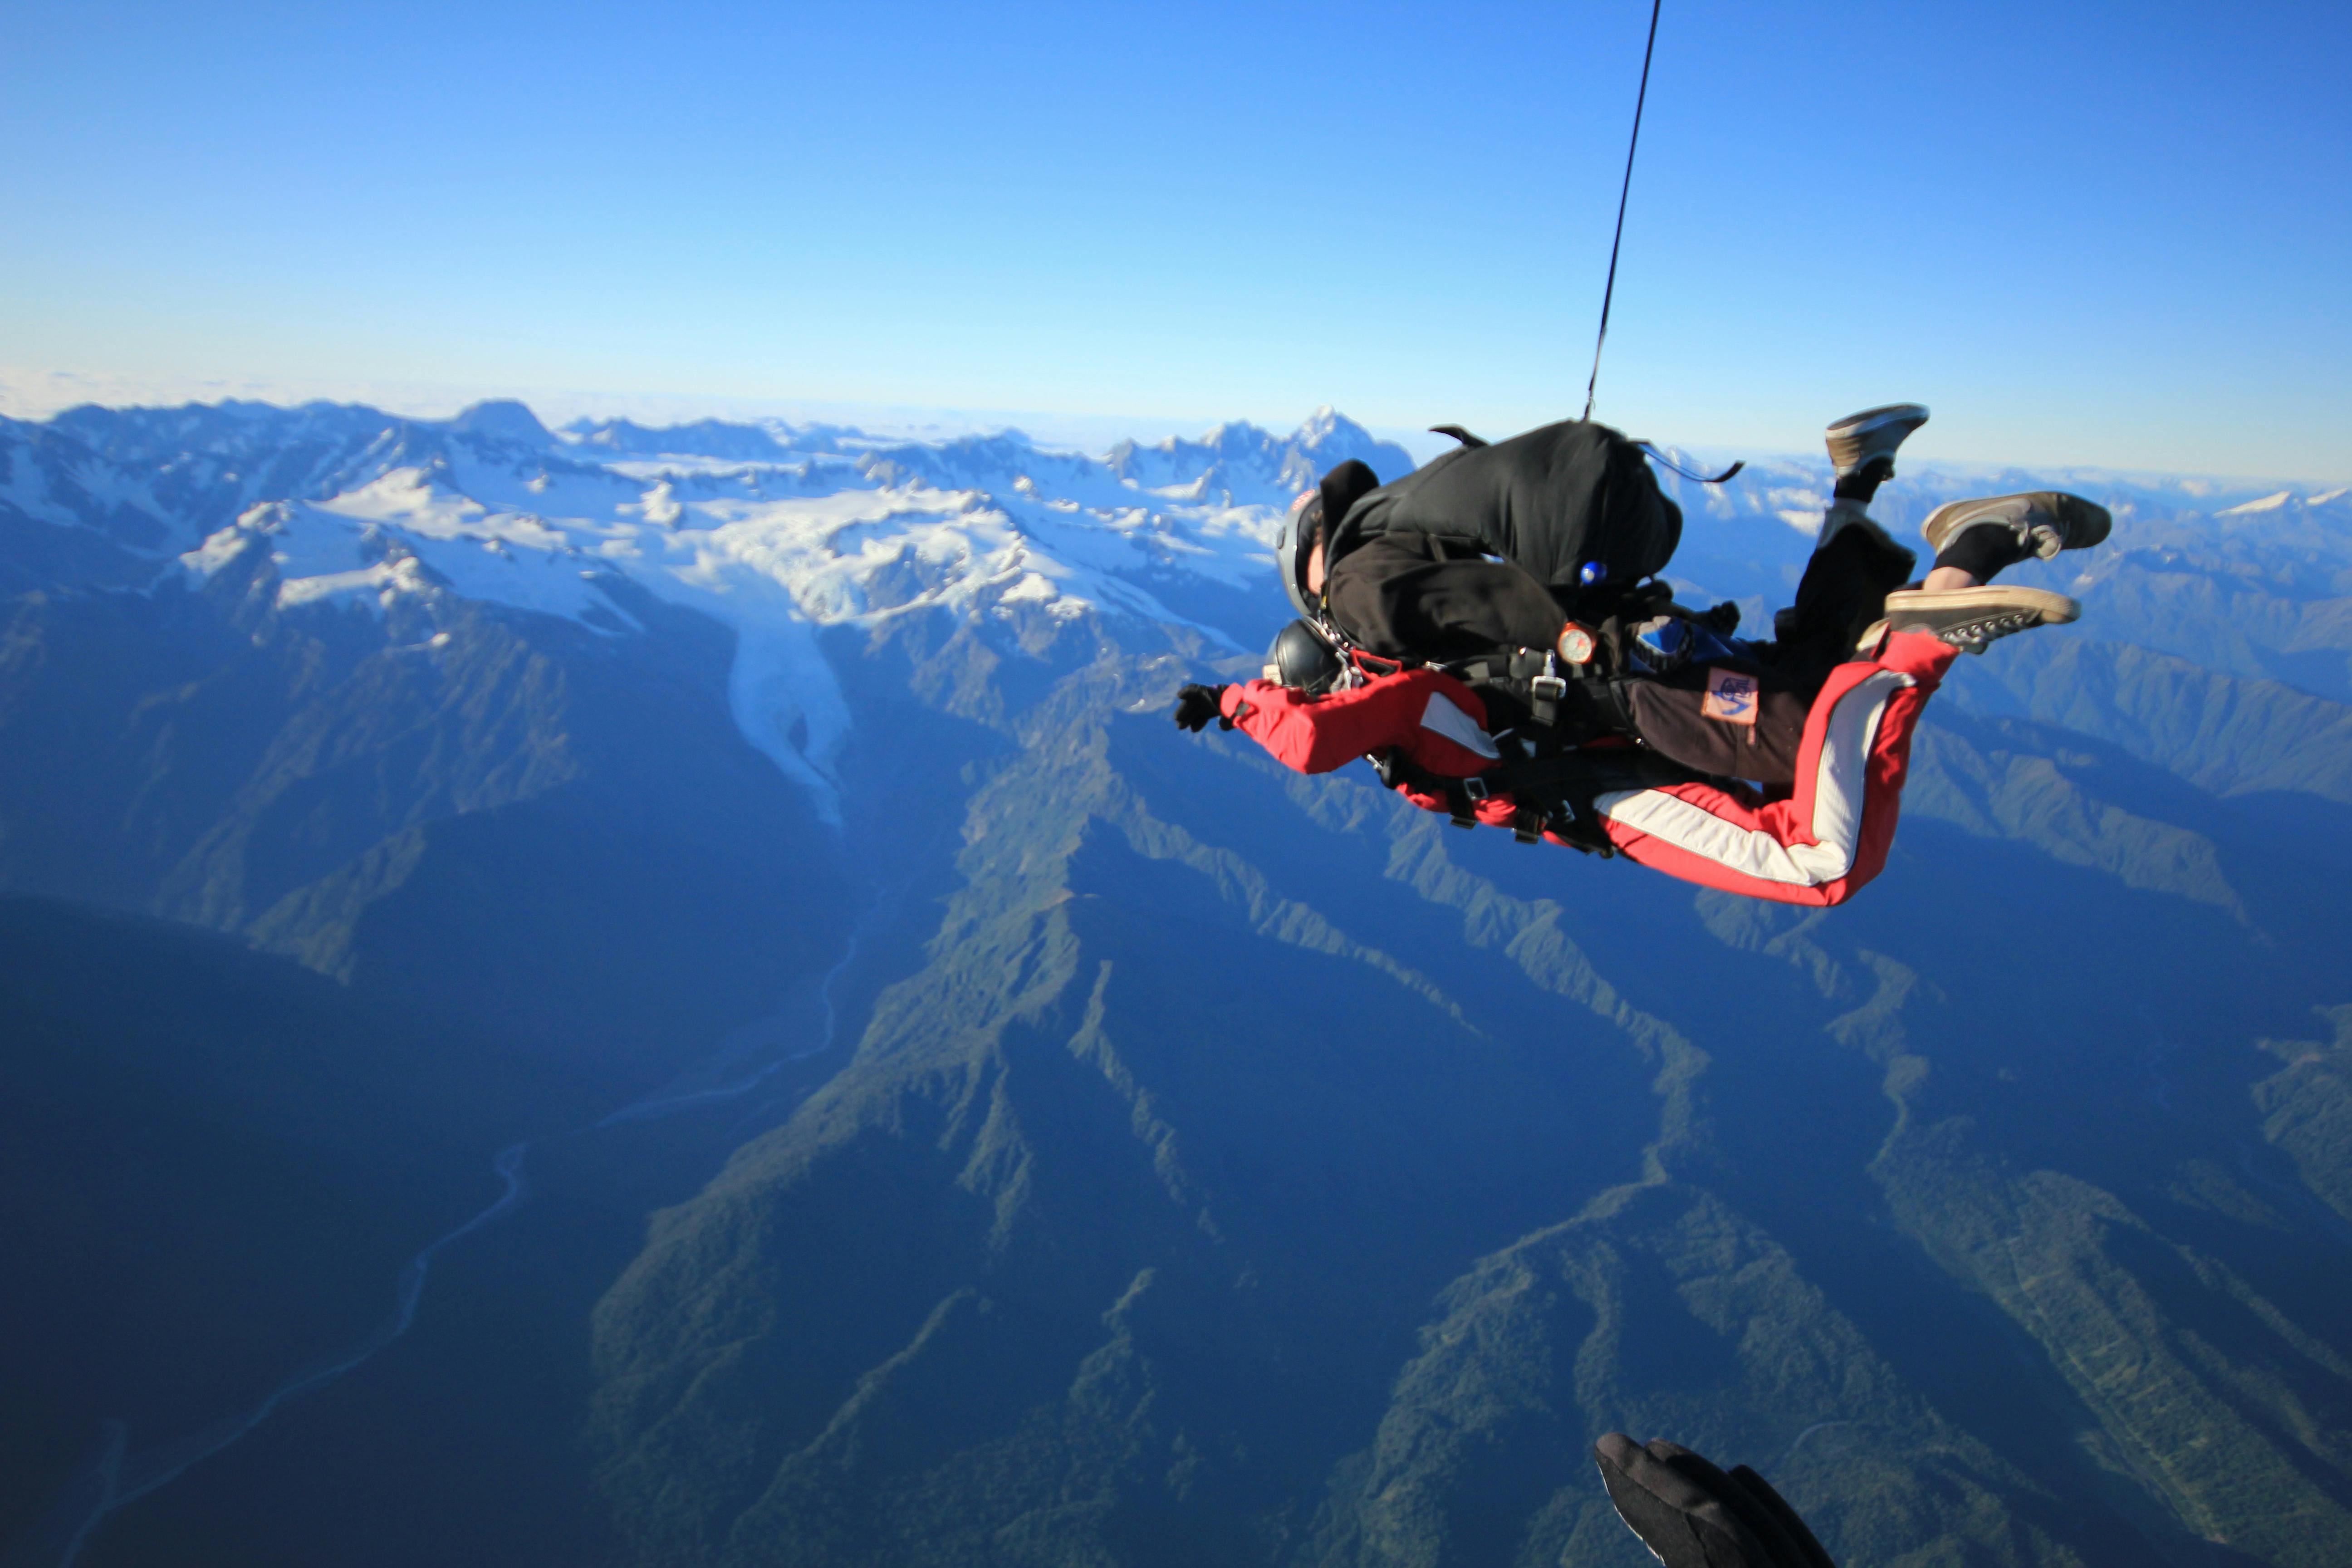 Tandem skydive 10,000ft above Franz Josef and Fox Glaciers